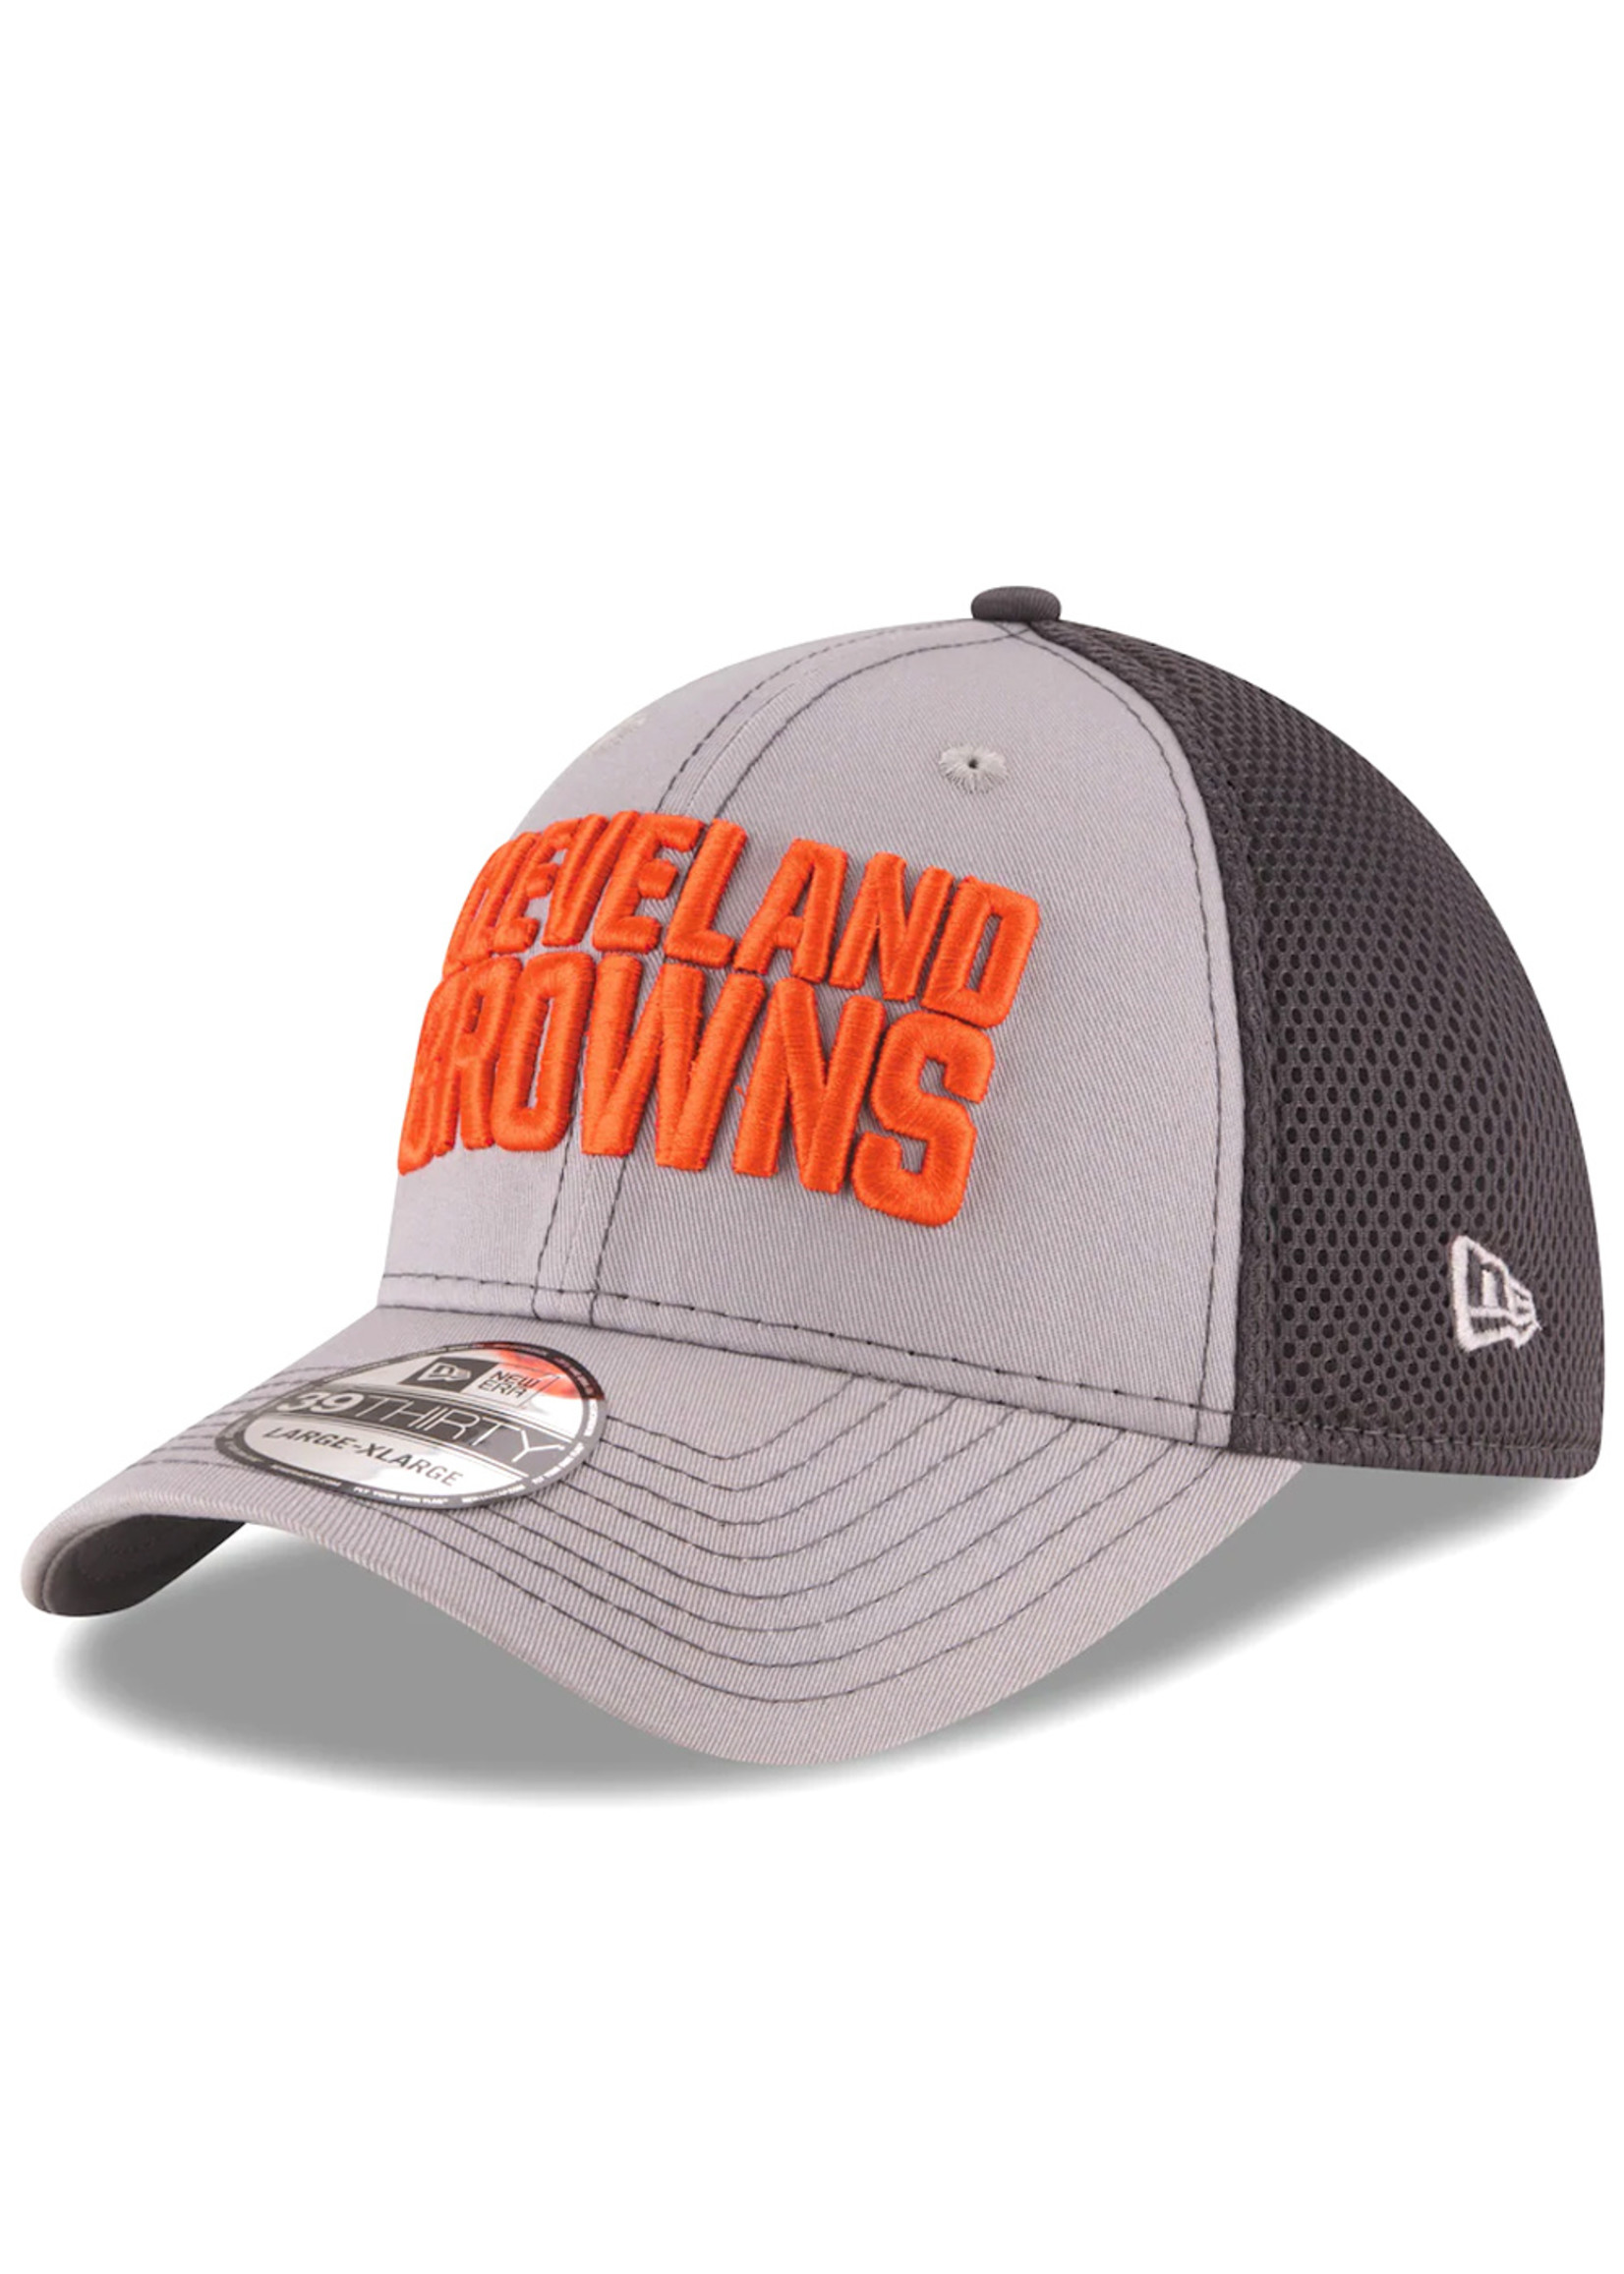 NEW ERA Cleveland Browns New Era Grayed Out Neo 2 39THIRTY Flex Hat - Gray